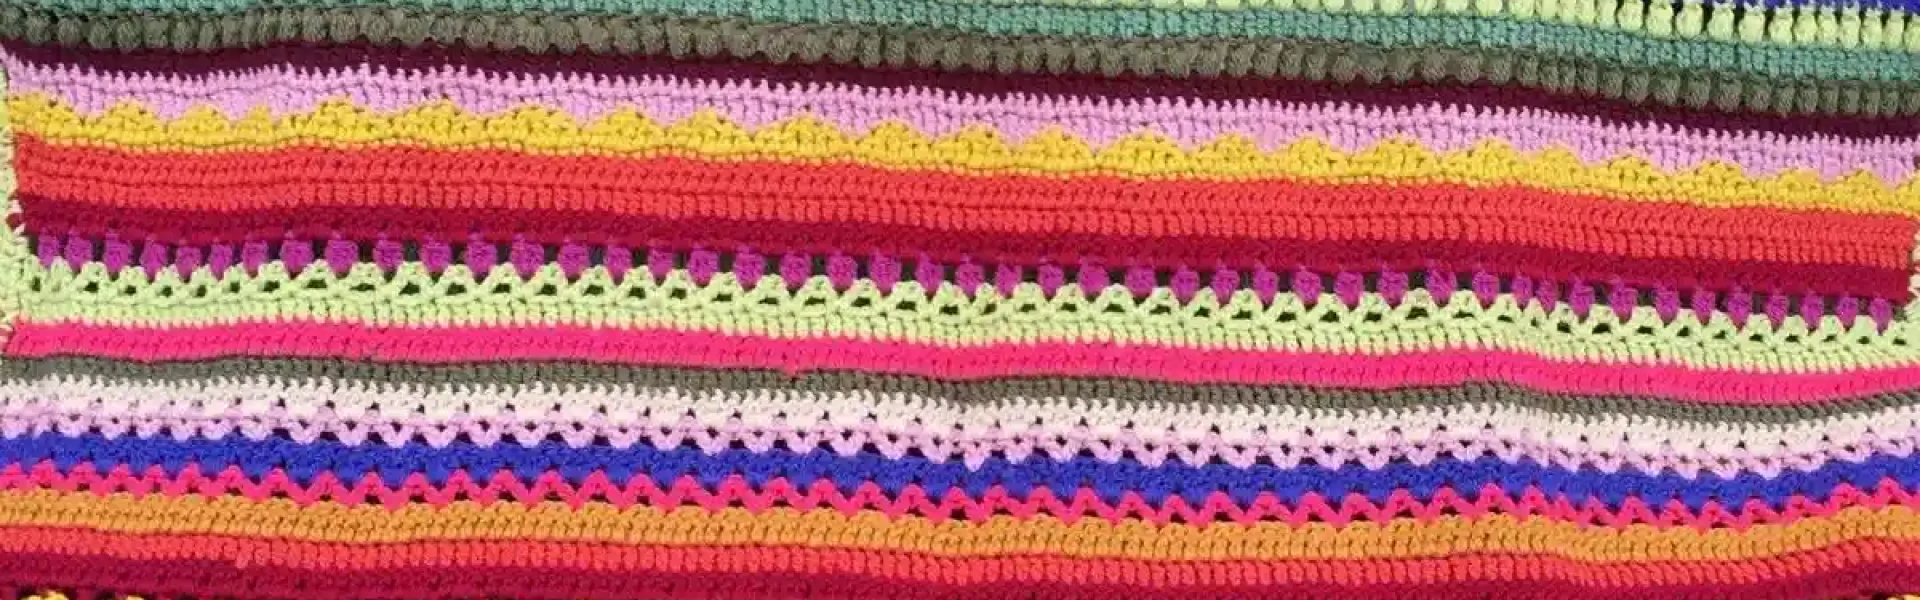 Graduate Story by Amanda Godden, Crochet Graduate